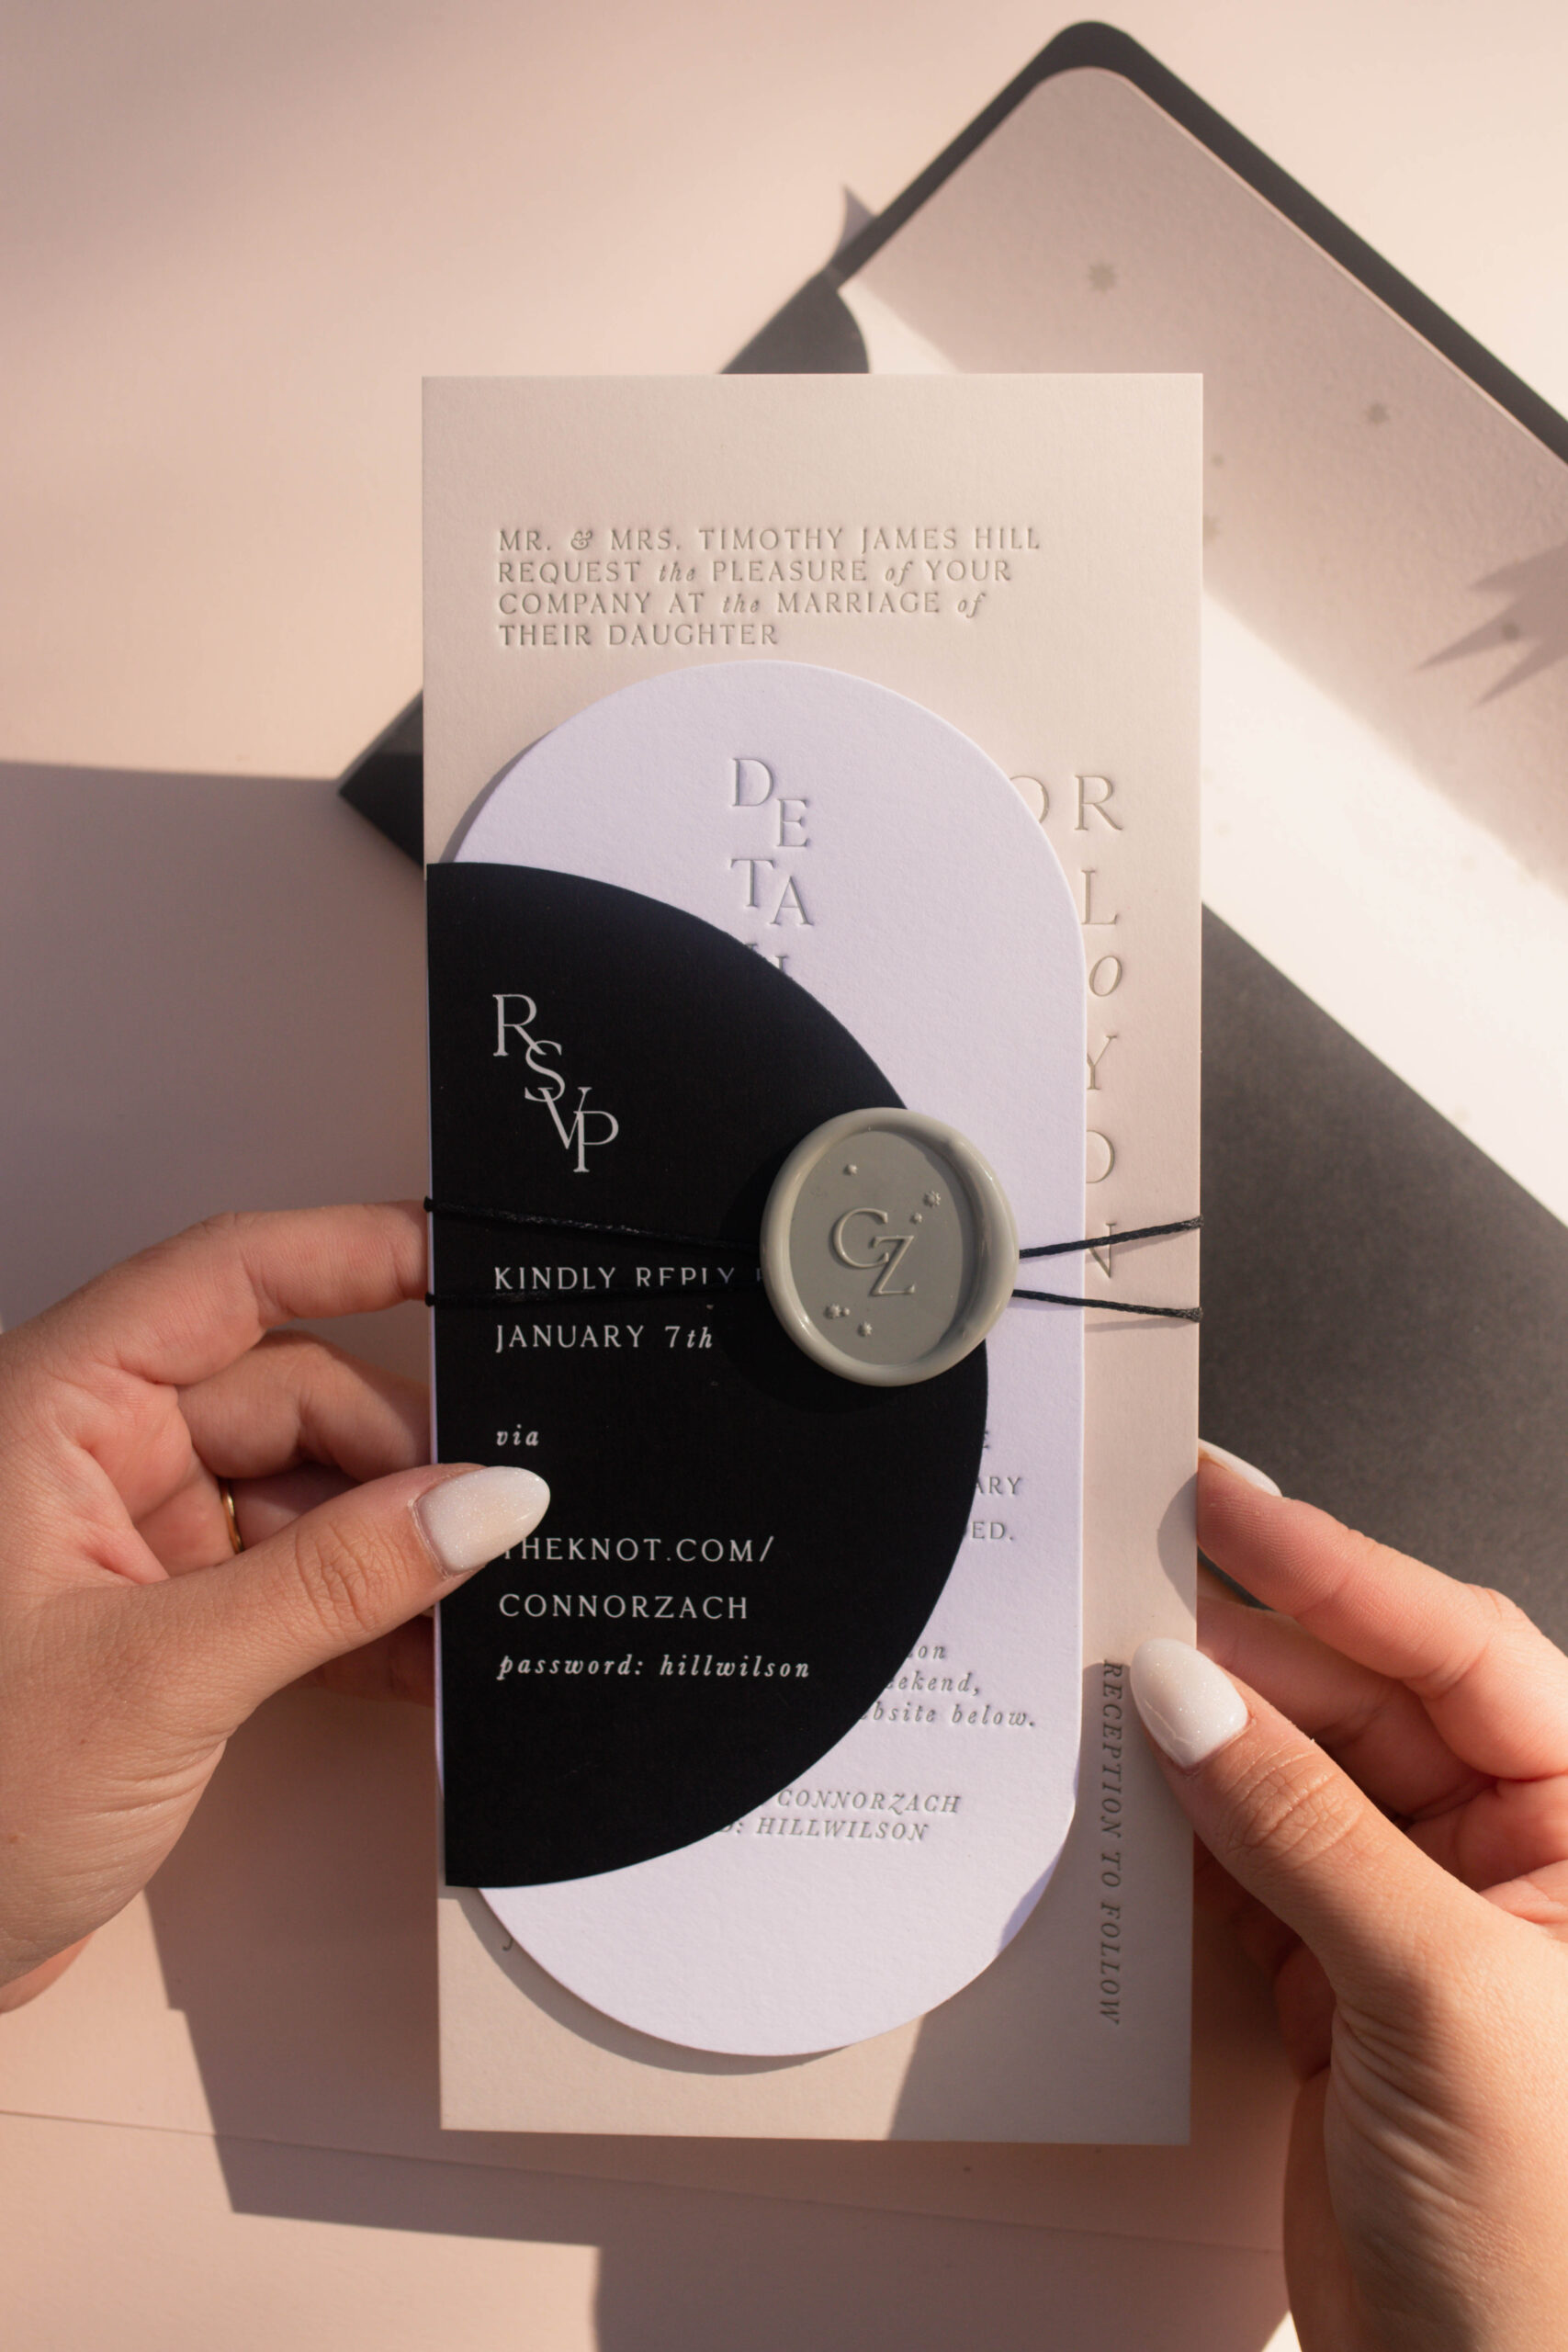 Oval shaped invitations